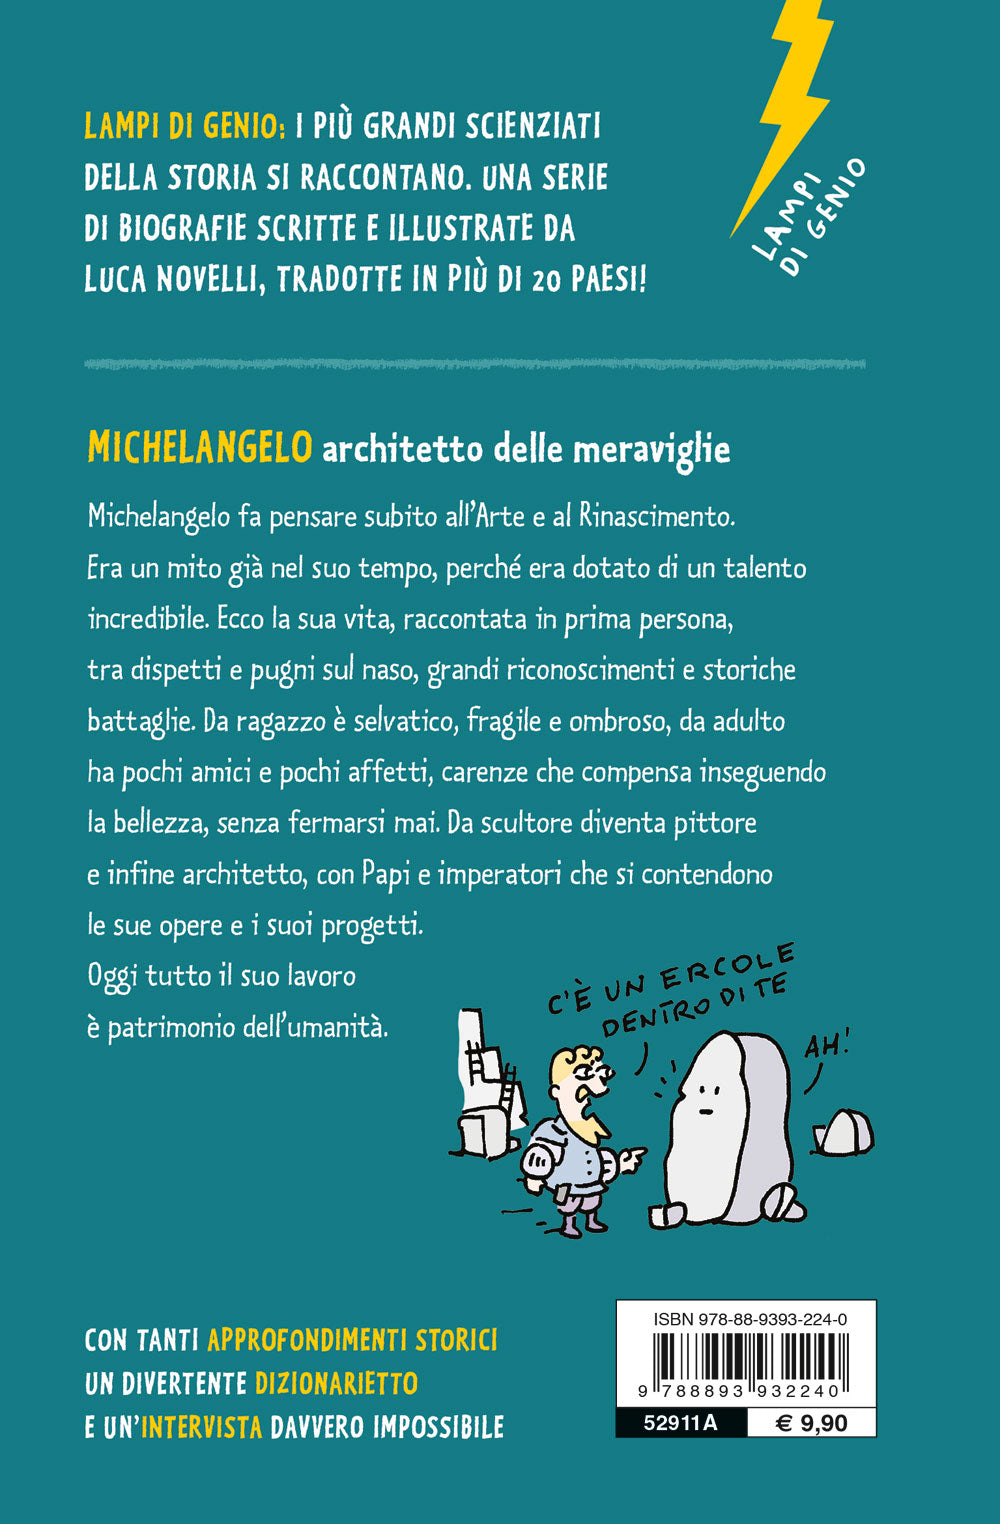 Michelangelo, architetto delle meraviglie